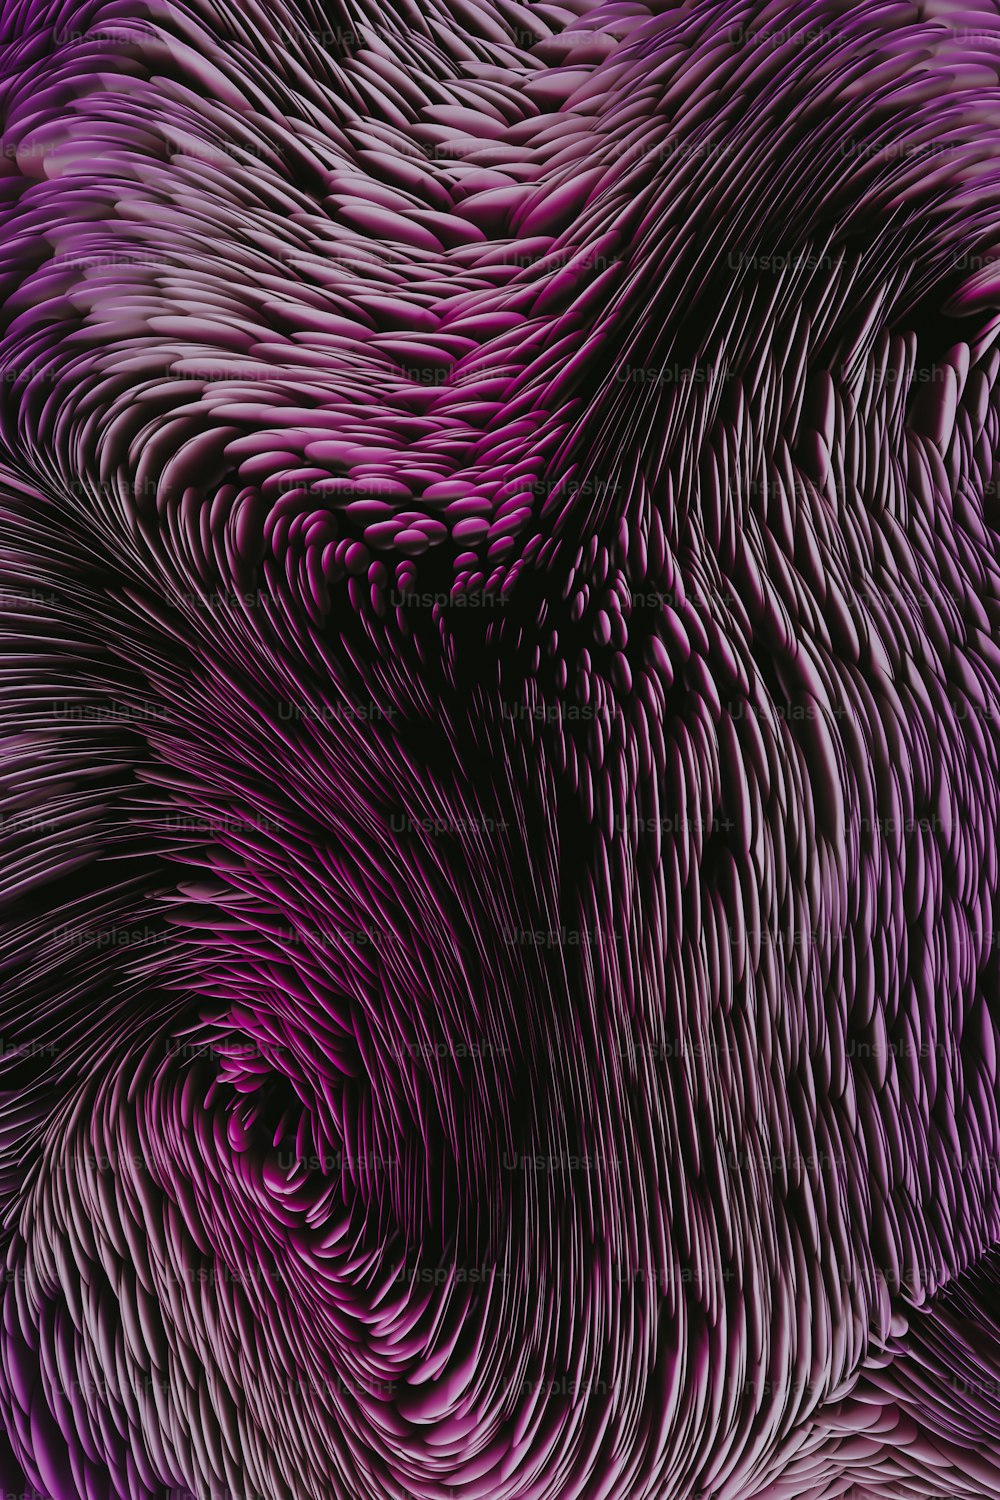 Un primer plano de una pluma púrpura y negra